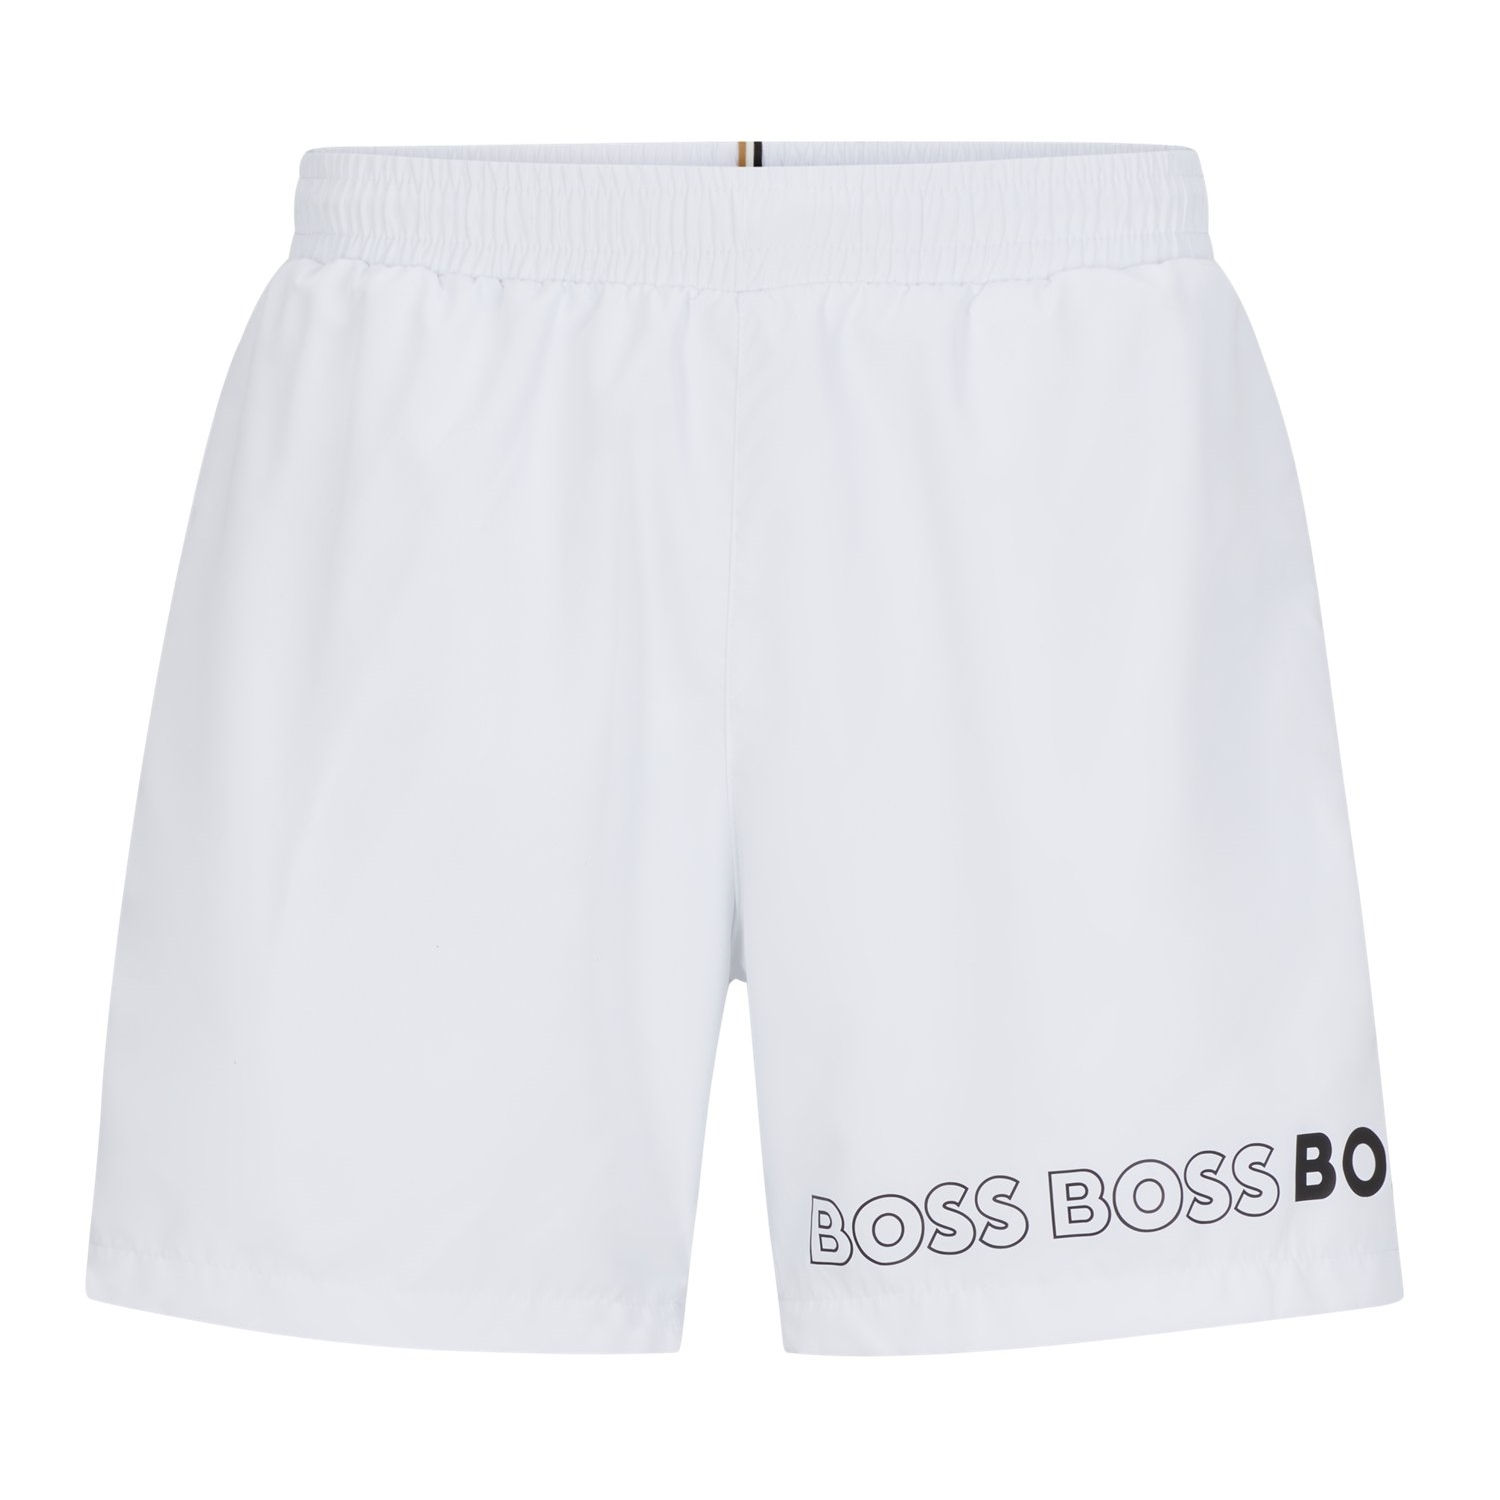 Купальные шорты Hugo Boss With Repeat Logos, белый купальные шорты hugo boss with repeat logos темно серый